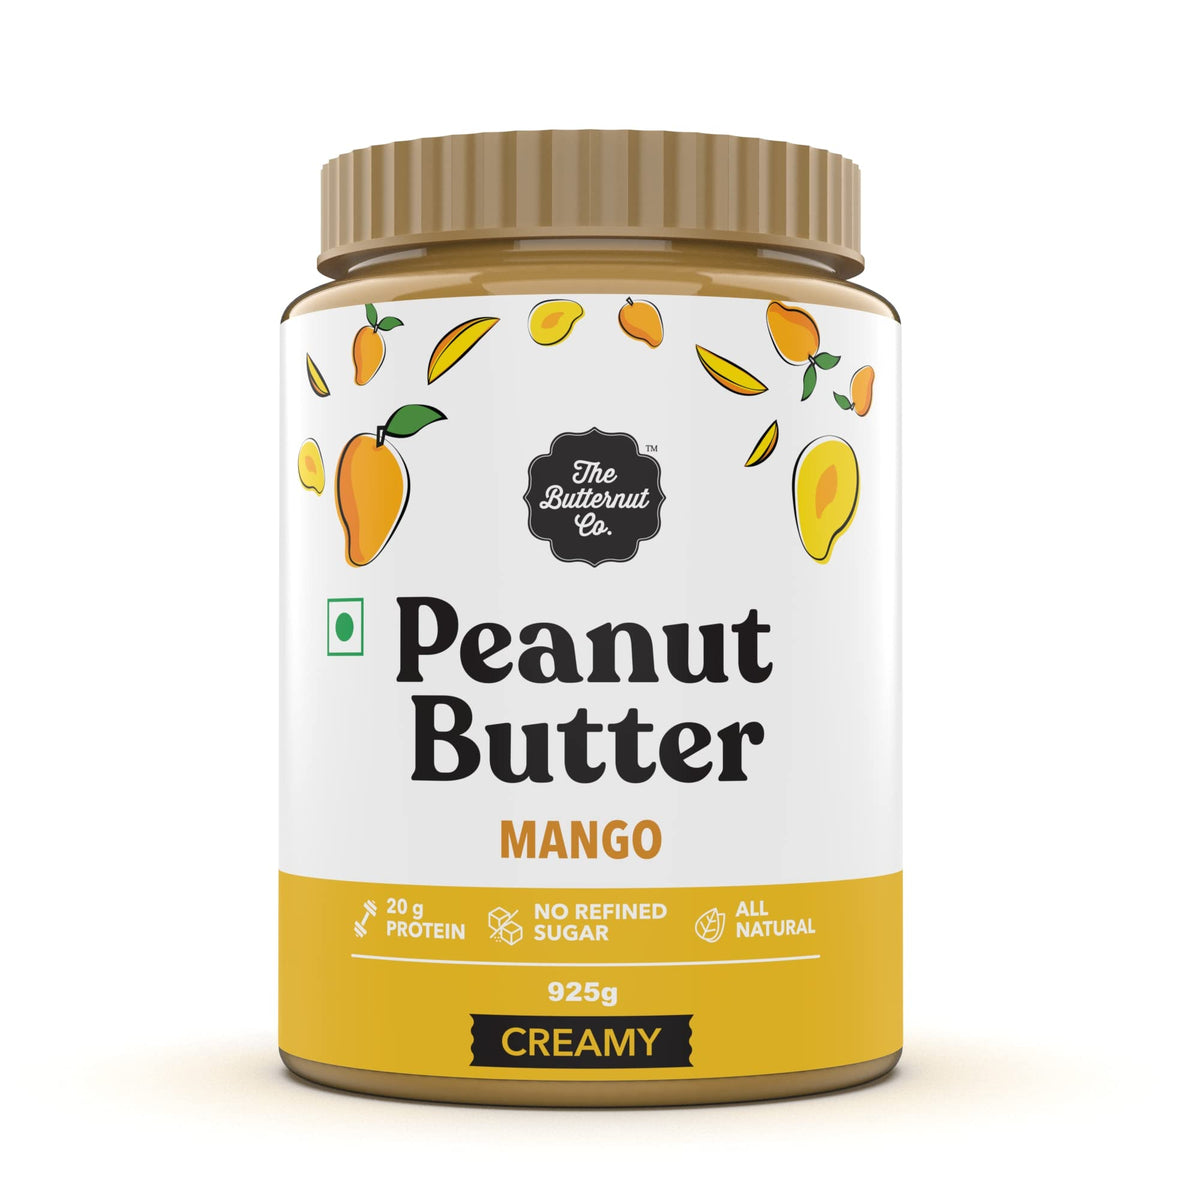 The Butternut Co. Mango Peanut Butter (கிரீமி) 925g | 20 கிராம் புரதம் | சுத்திகரிக்கப்பட்ட சர்க்கரை இல்லை | இயற்கை | பசையம் இல்லாத | கொலஸ்ட்ரால் இலவசம் | டிரான்ஸ் கொழுப்பு இல்லை